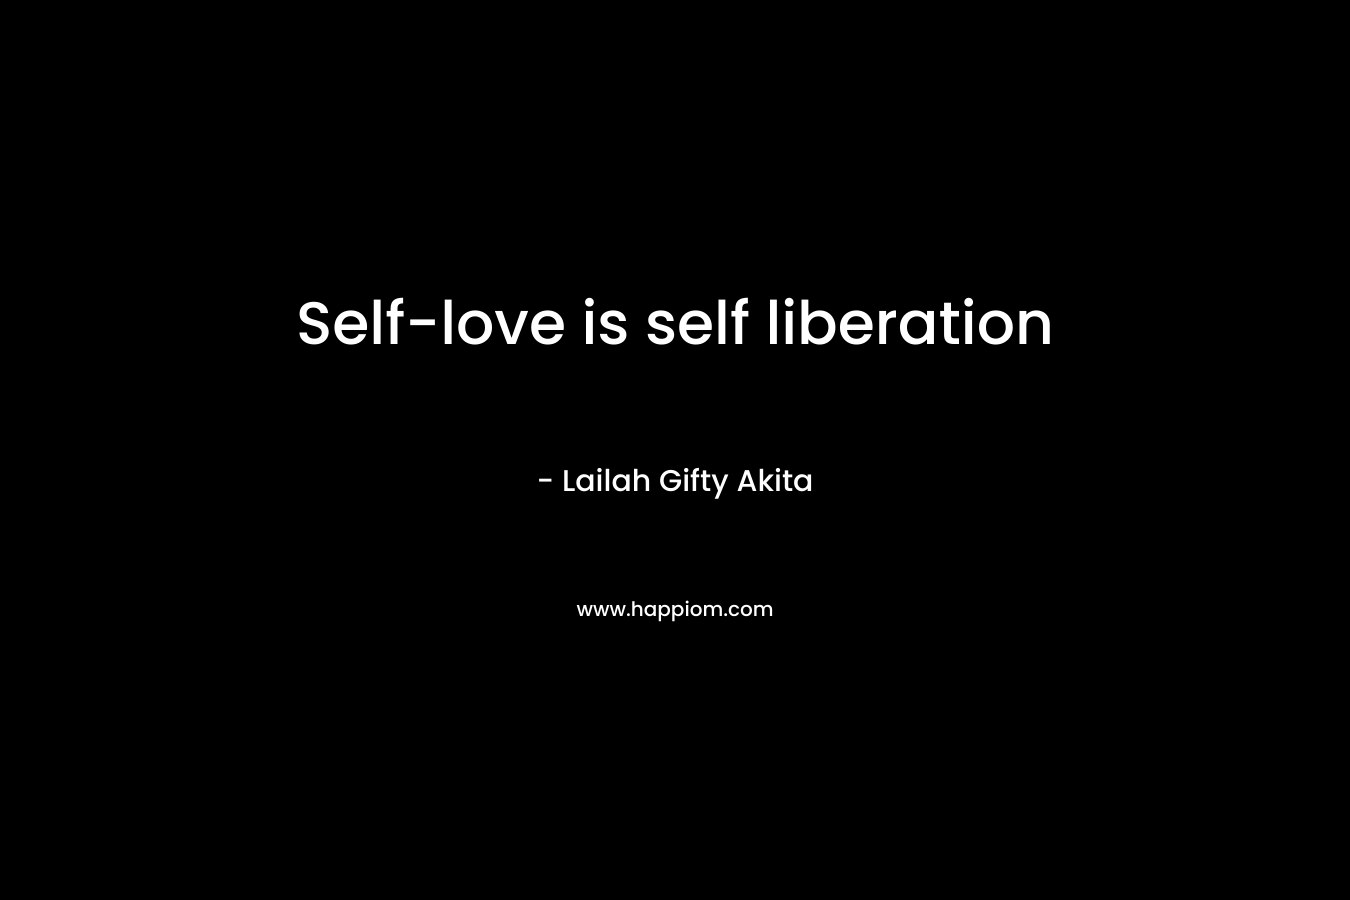 Self-love is self liberation